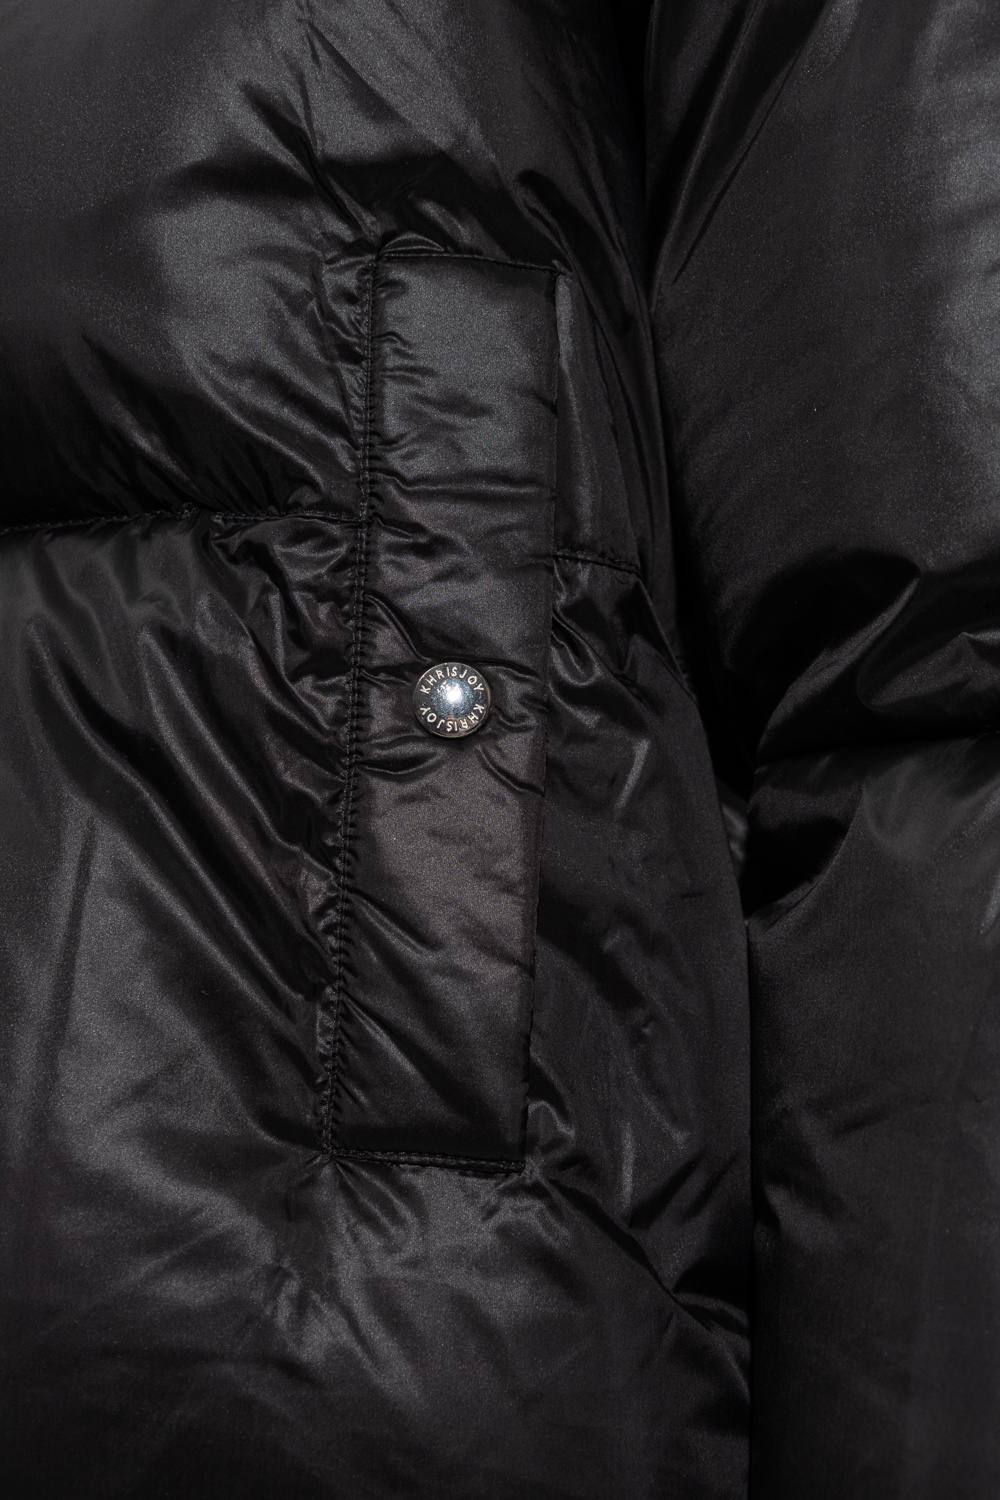 Khrisjoy Oversize zip-up logo-print jacket